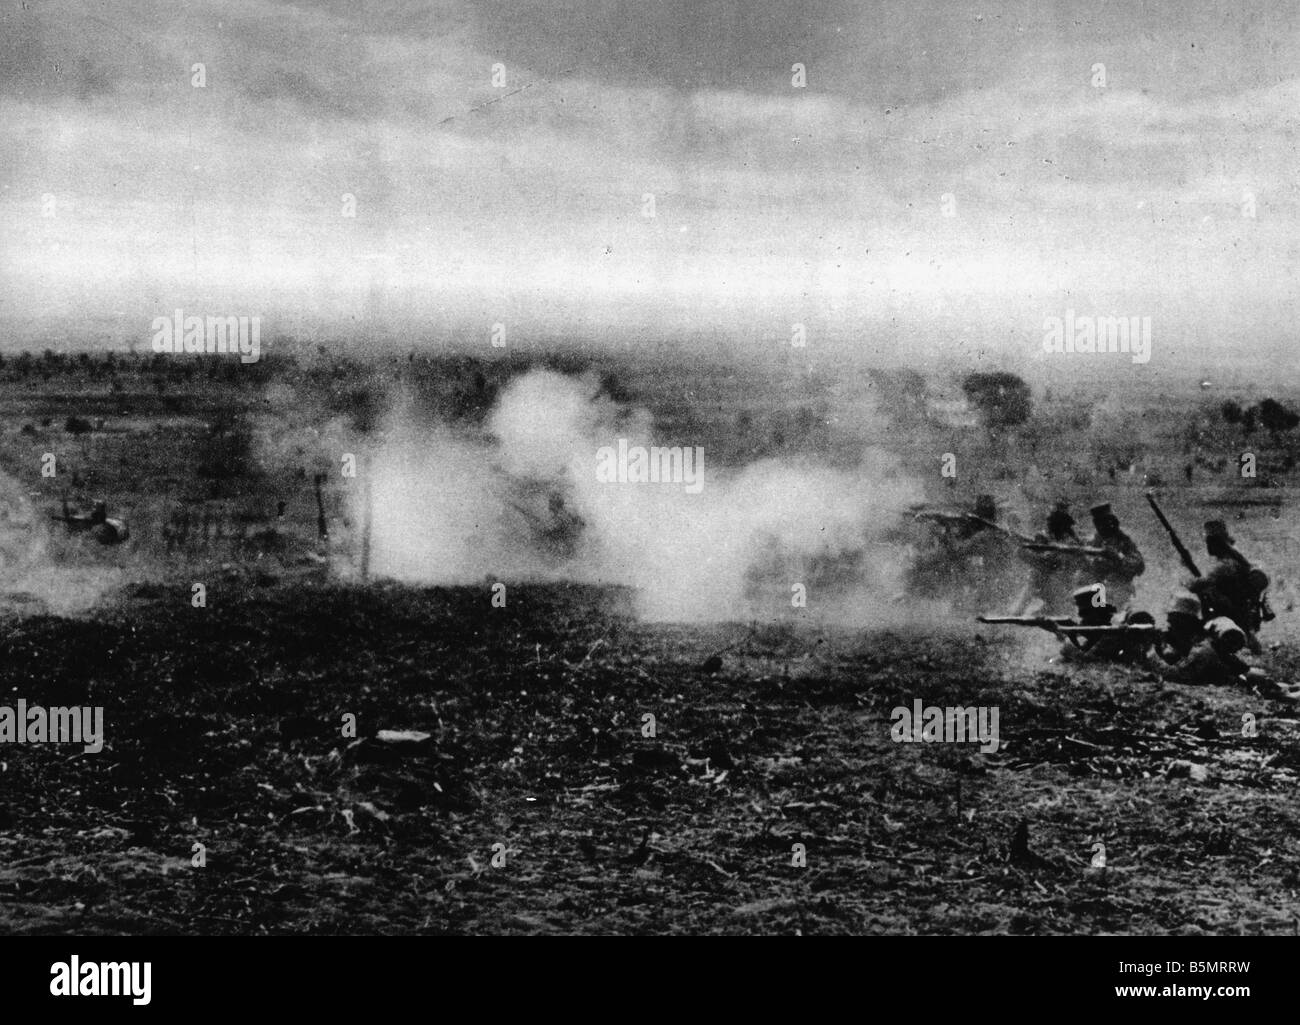 Askaris feuern im 1. Weltkrieg Foto 1. Weltkrieg Krieg in den Kolonien Deutsch-Ostafrika heute Tansania Askaris Foto schießen Stockfoto